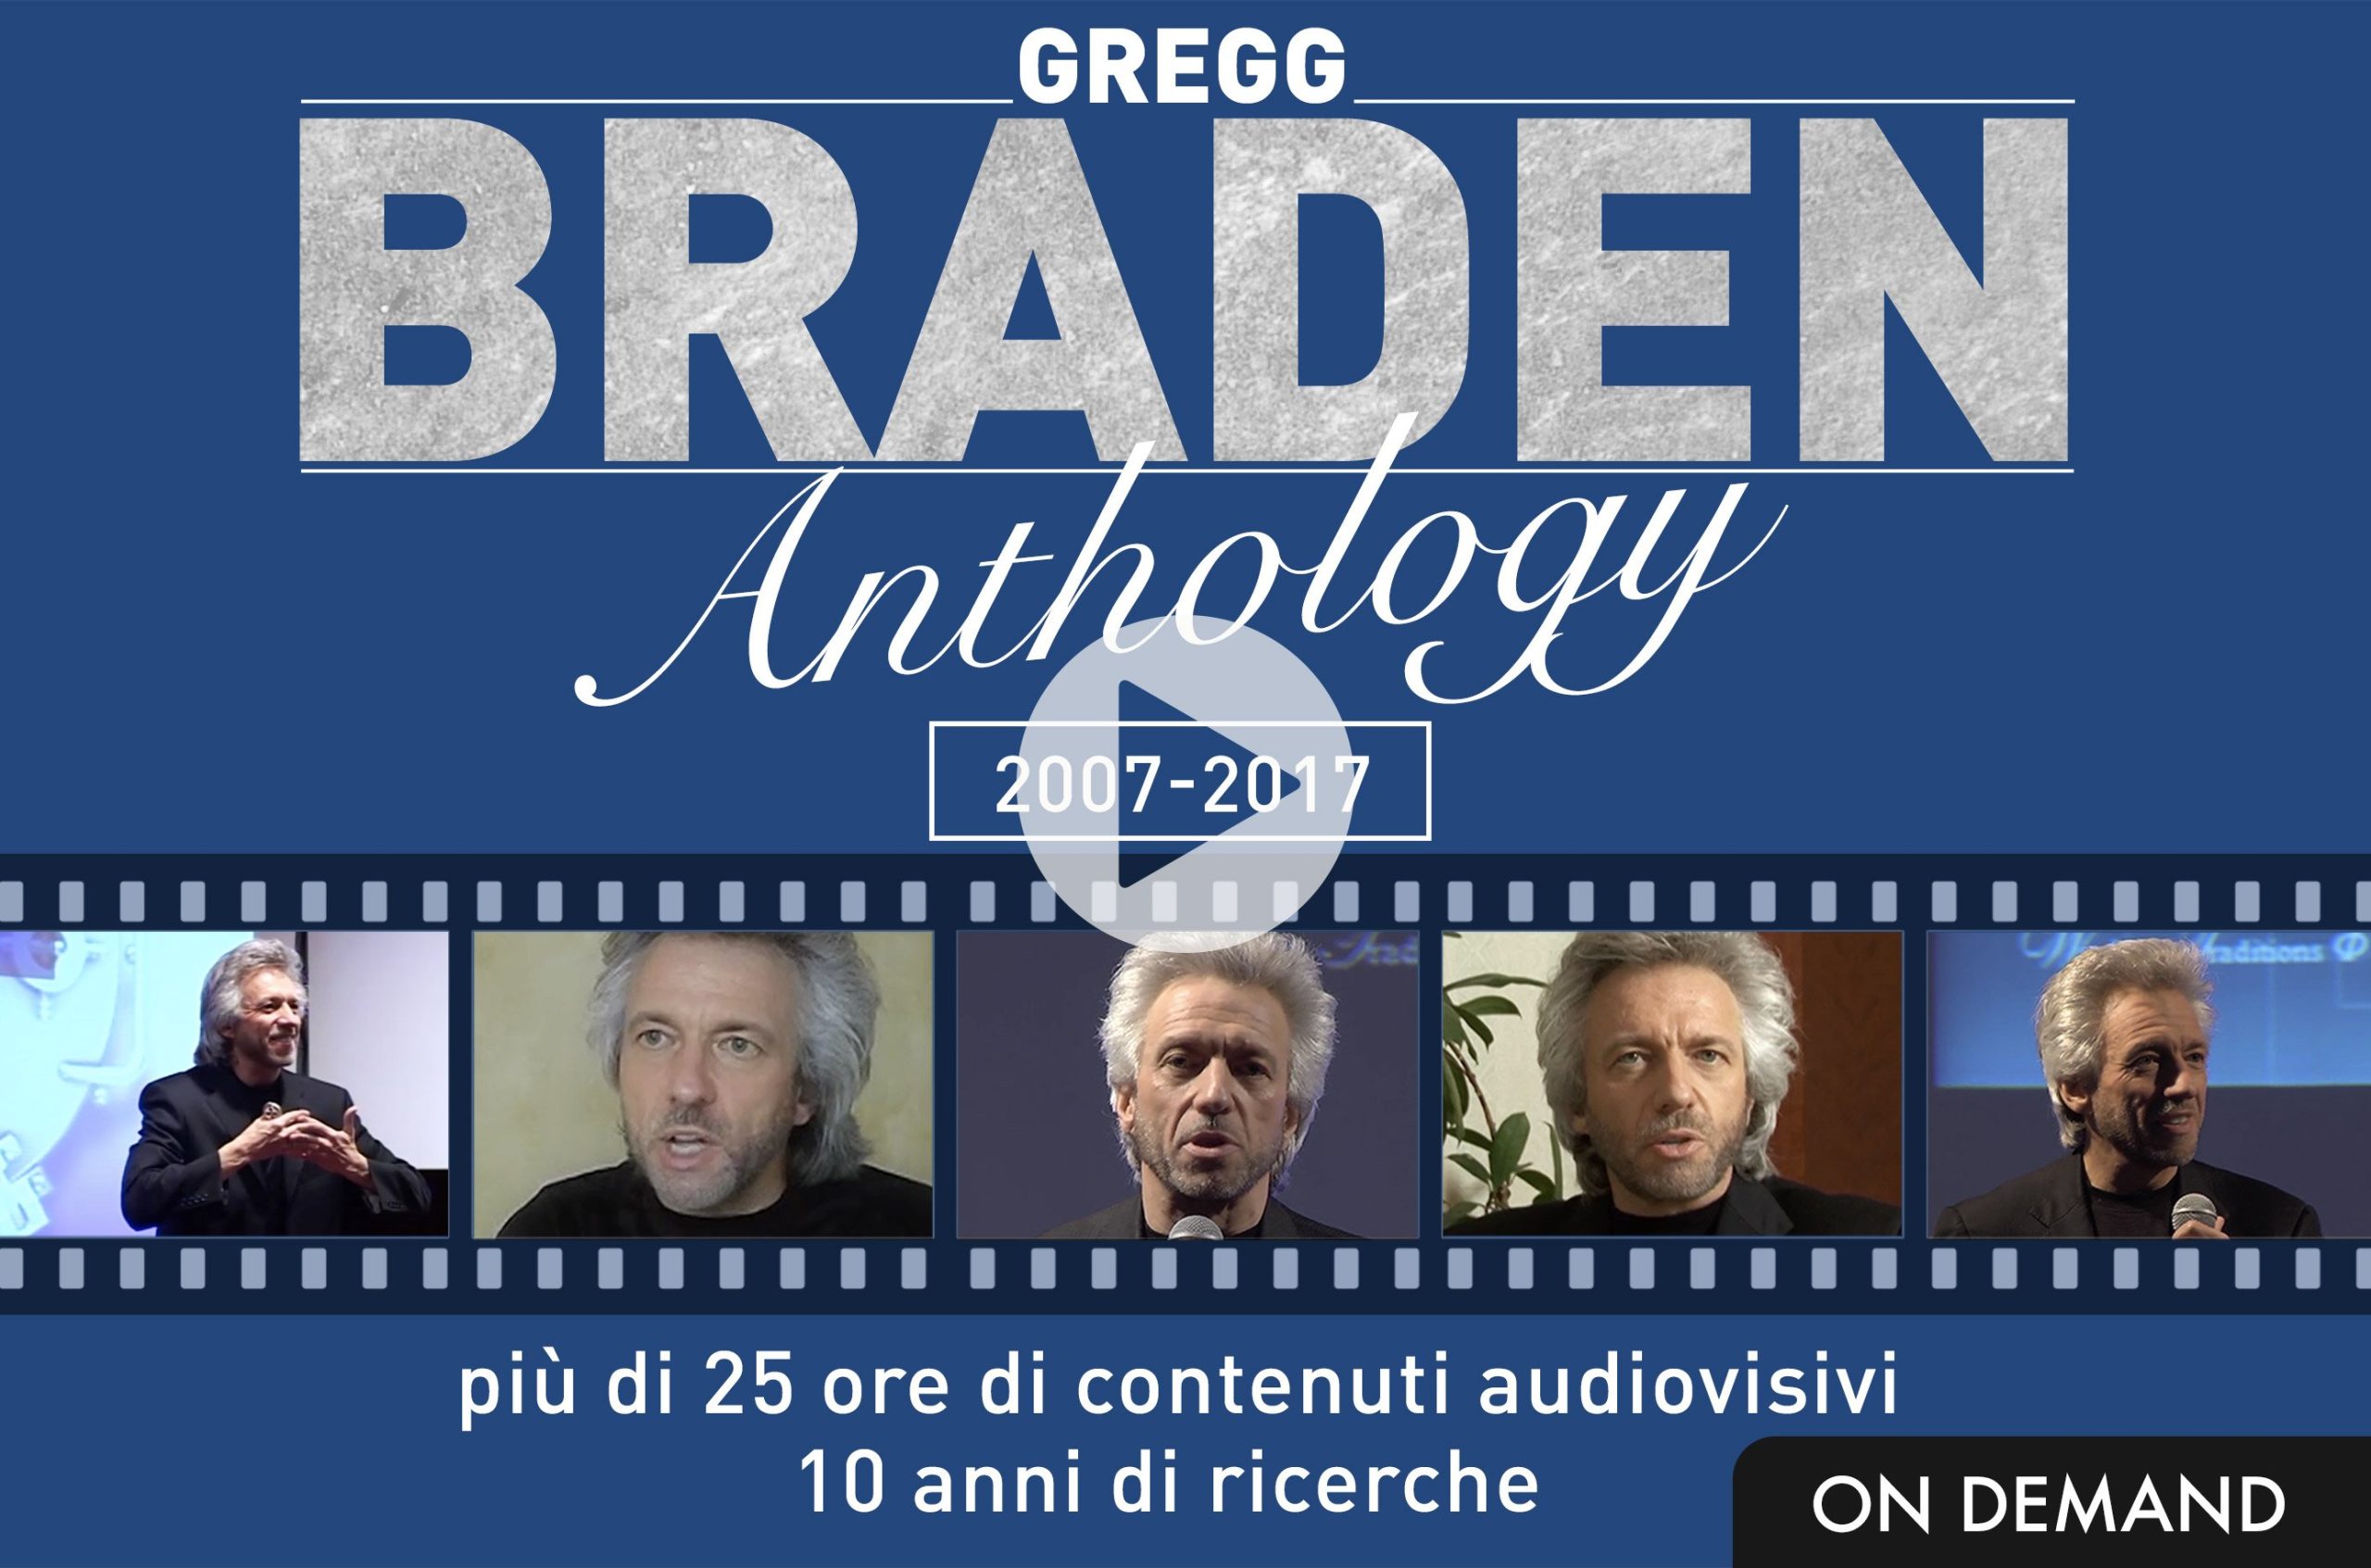 braden-anthology-download-copertina-300dpi